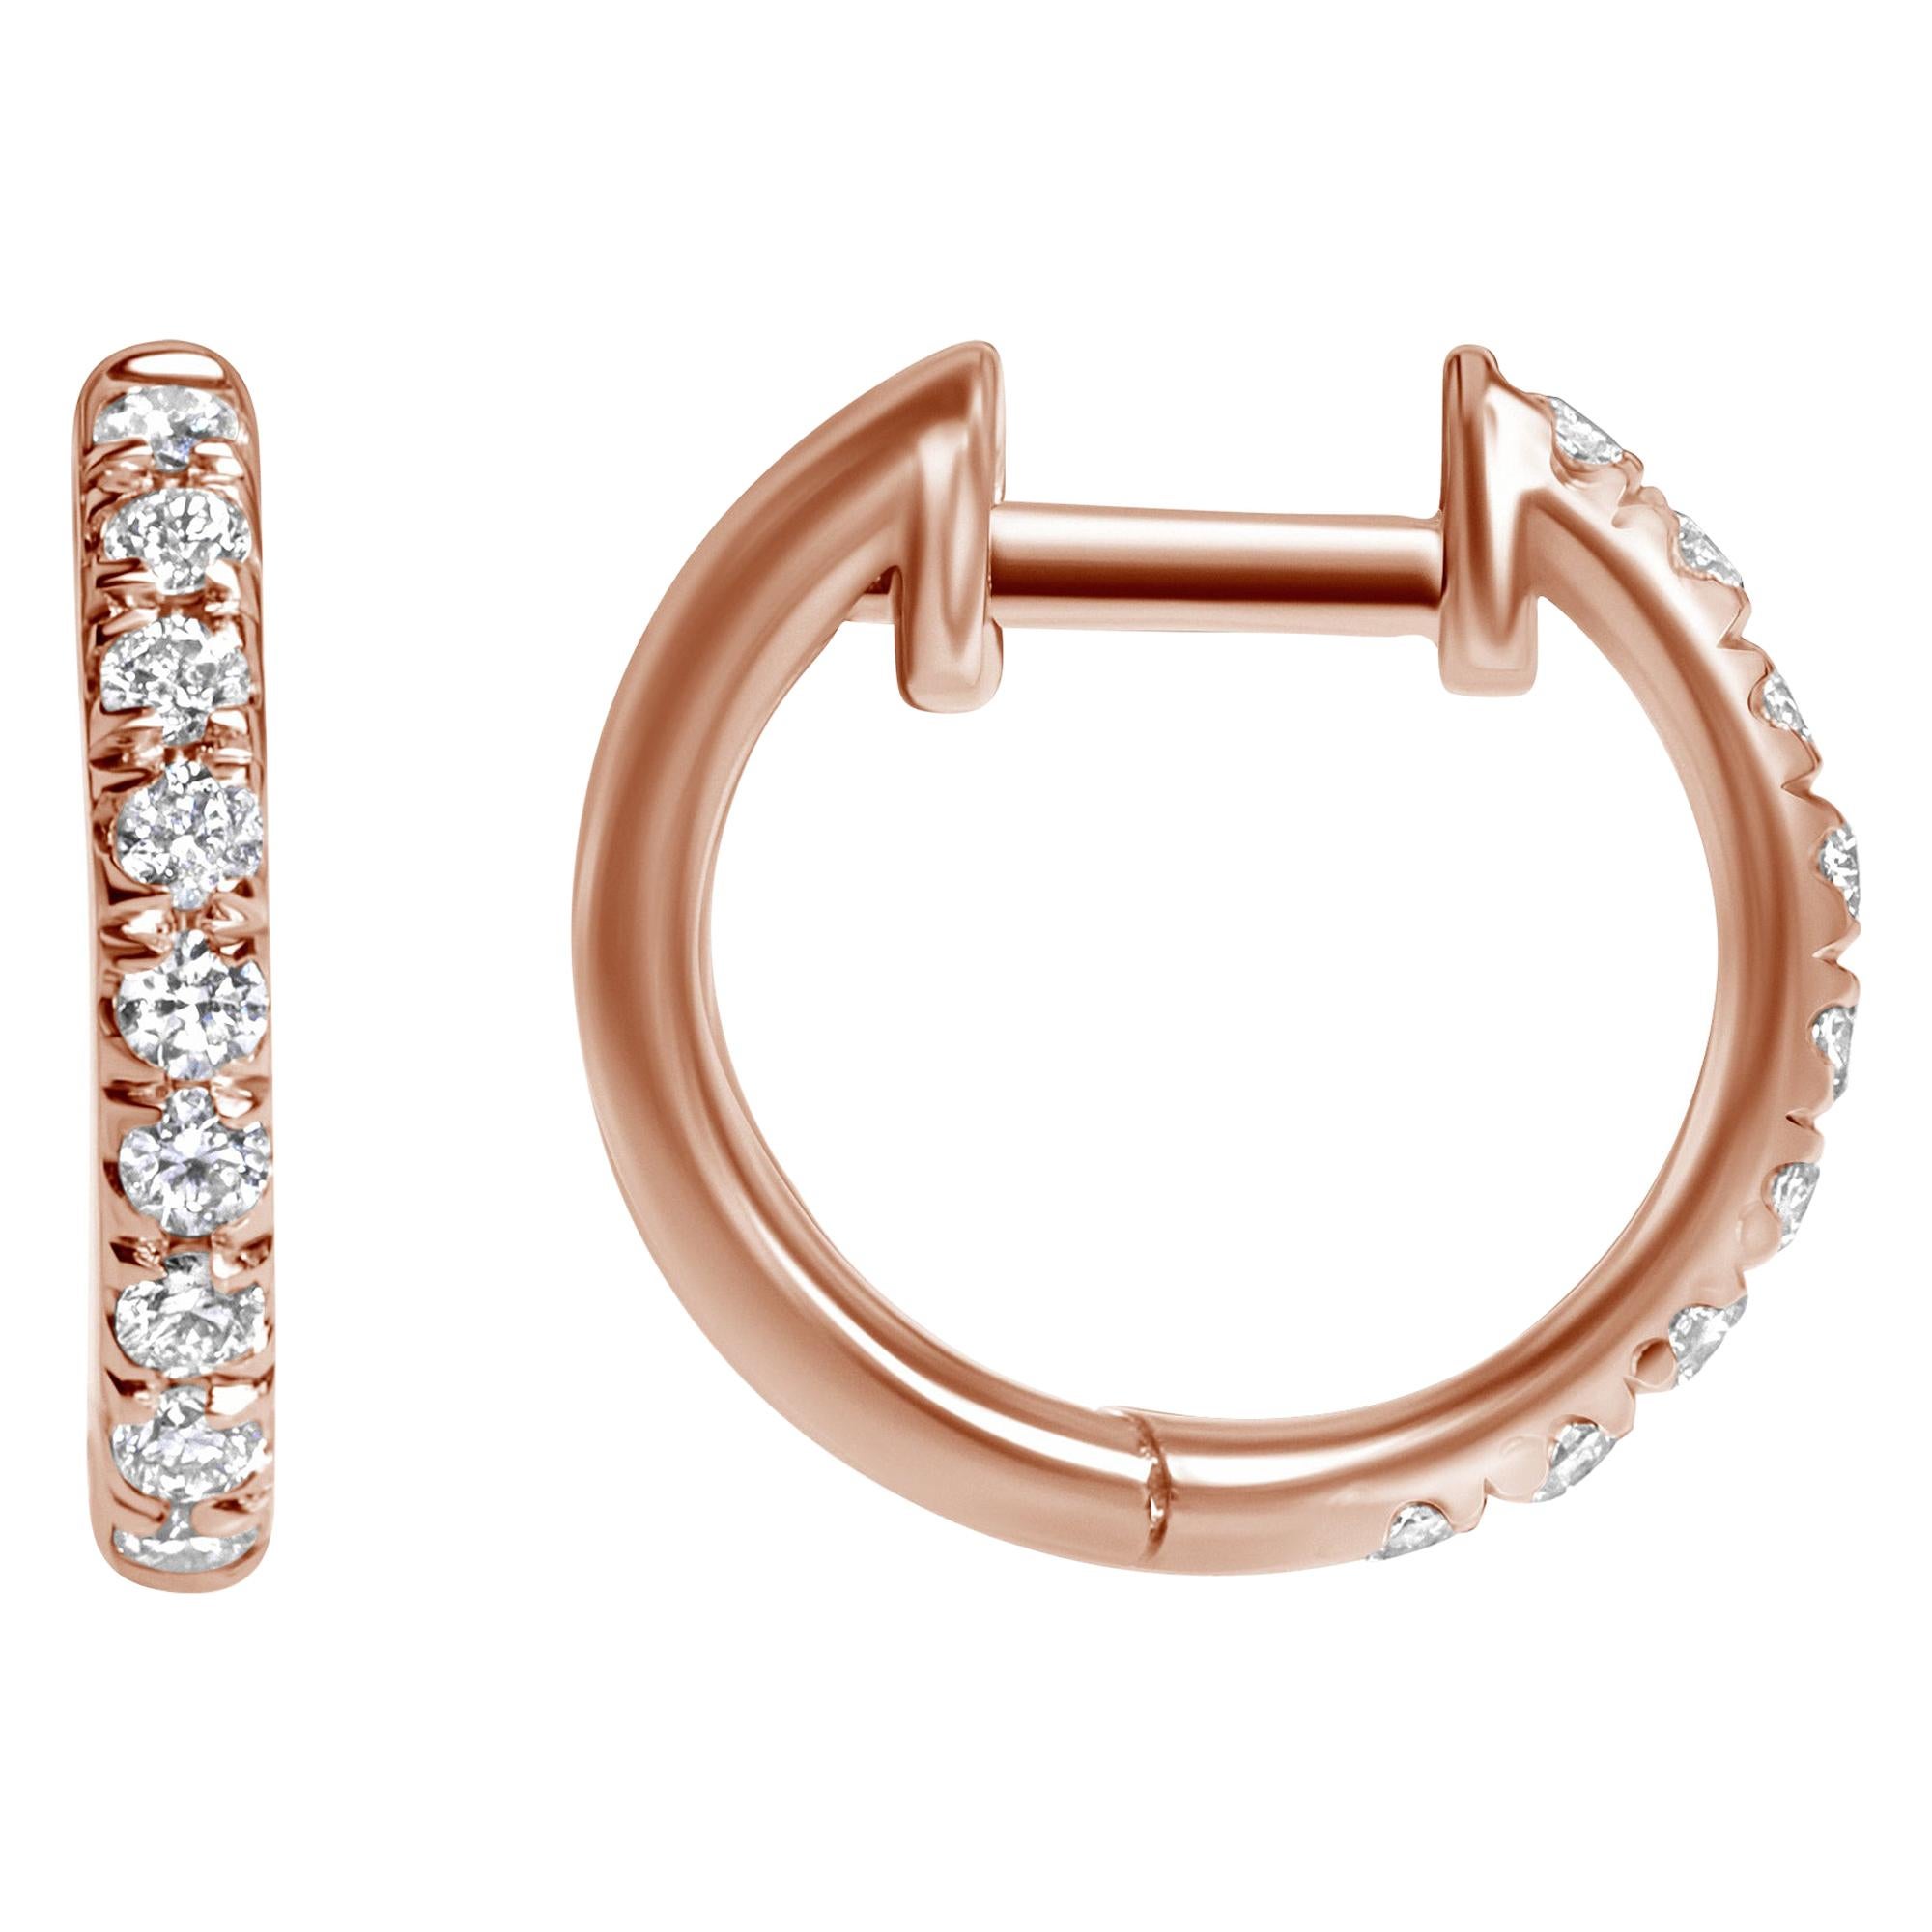 0.27 Carat Lori Diamond Hoop Earrings in 14 Karat Rose Gold - Shlomit Rogel For Sale